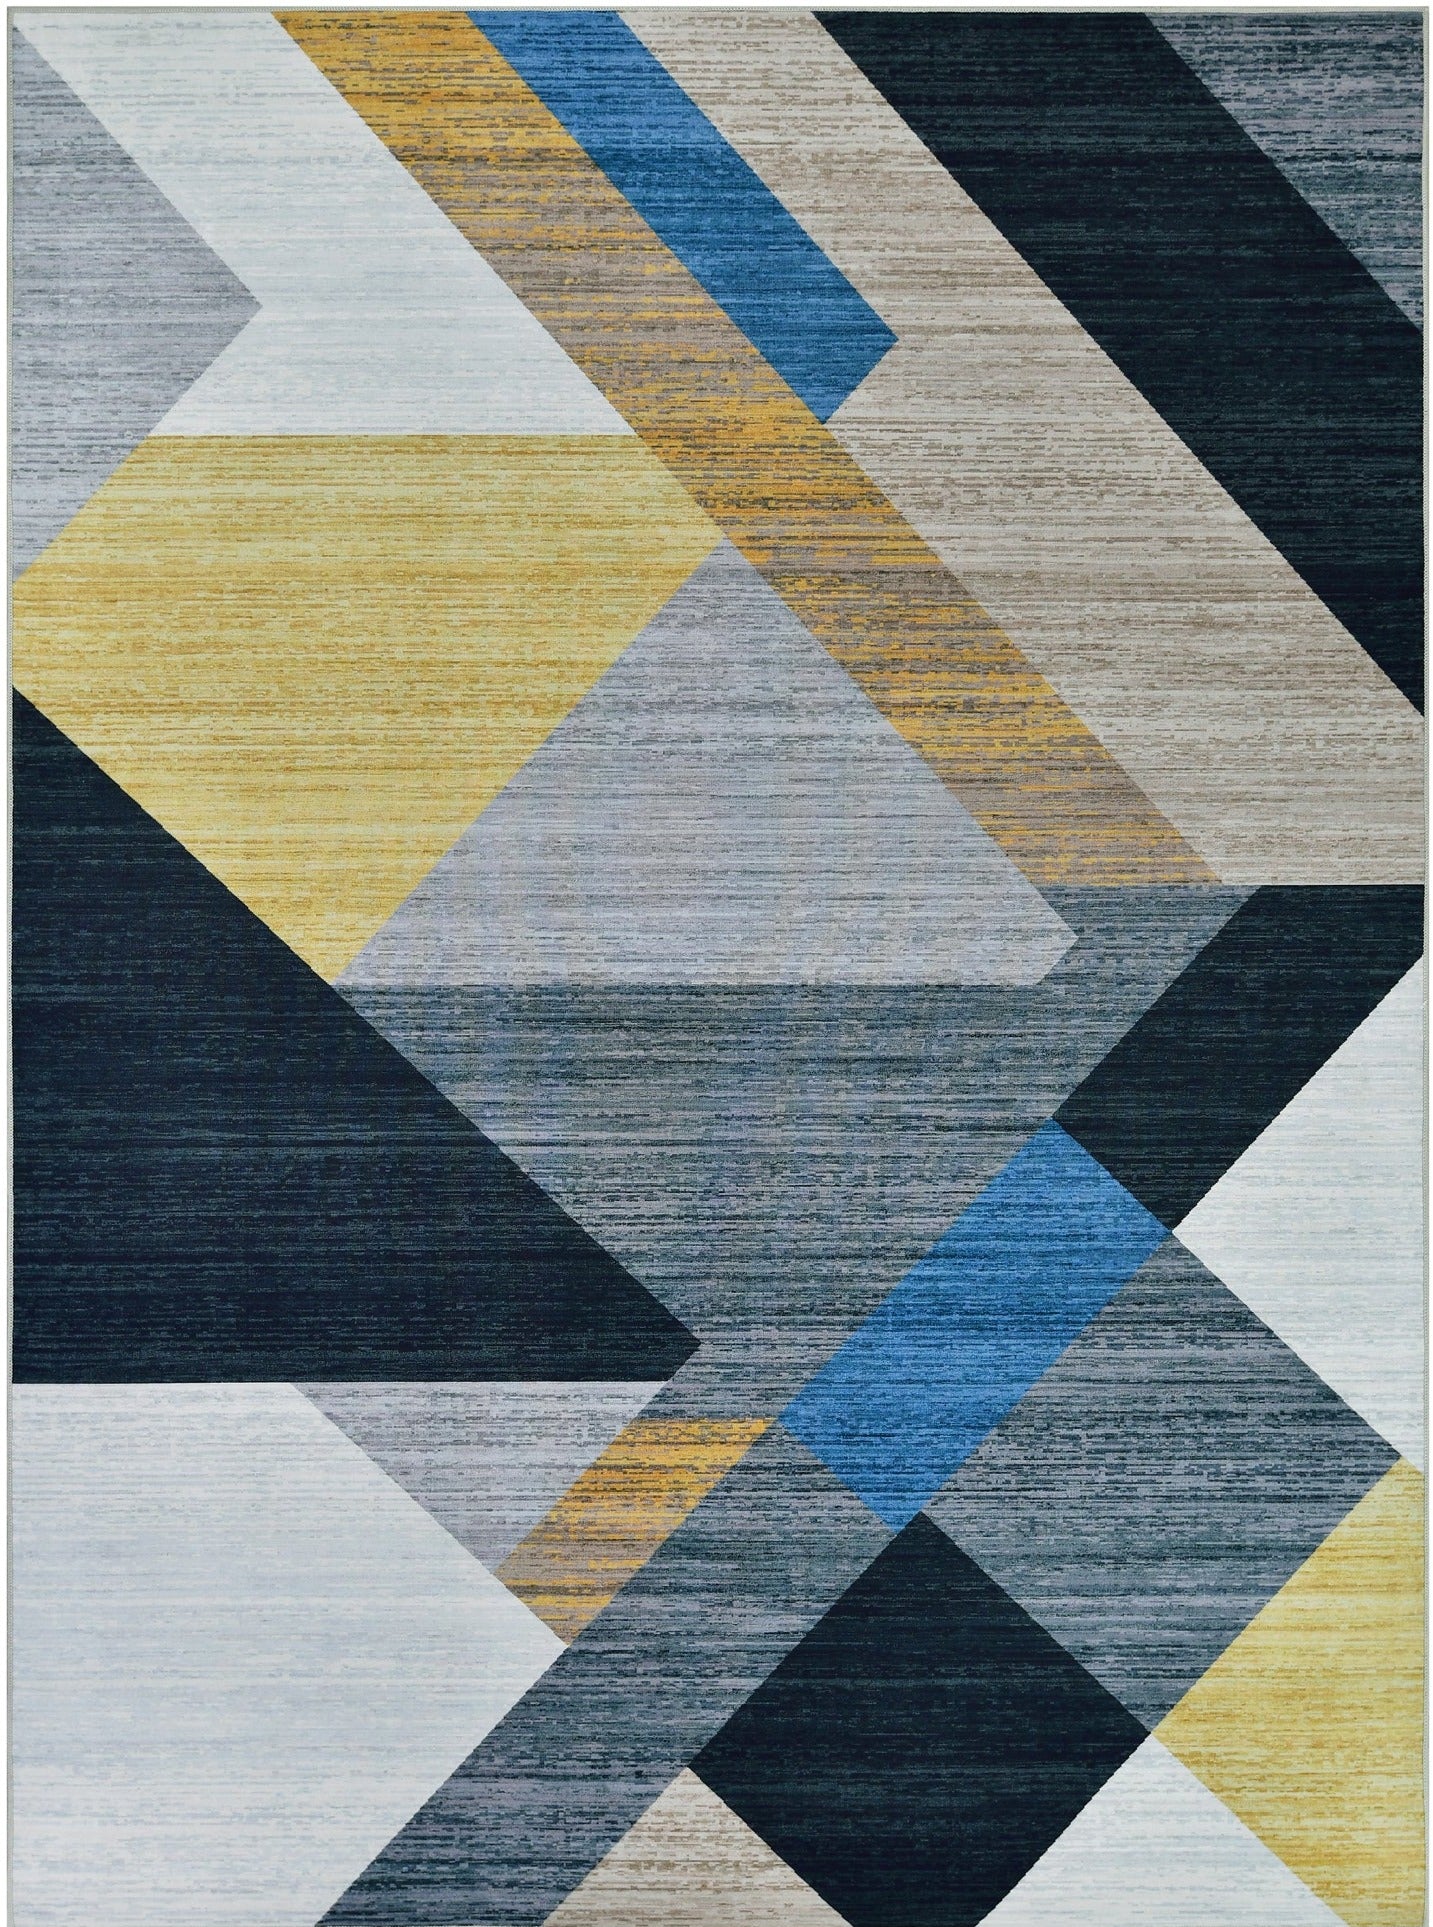 American cover design / Persian weavers Orion 1109 Multicolor Rug